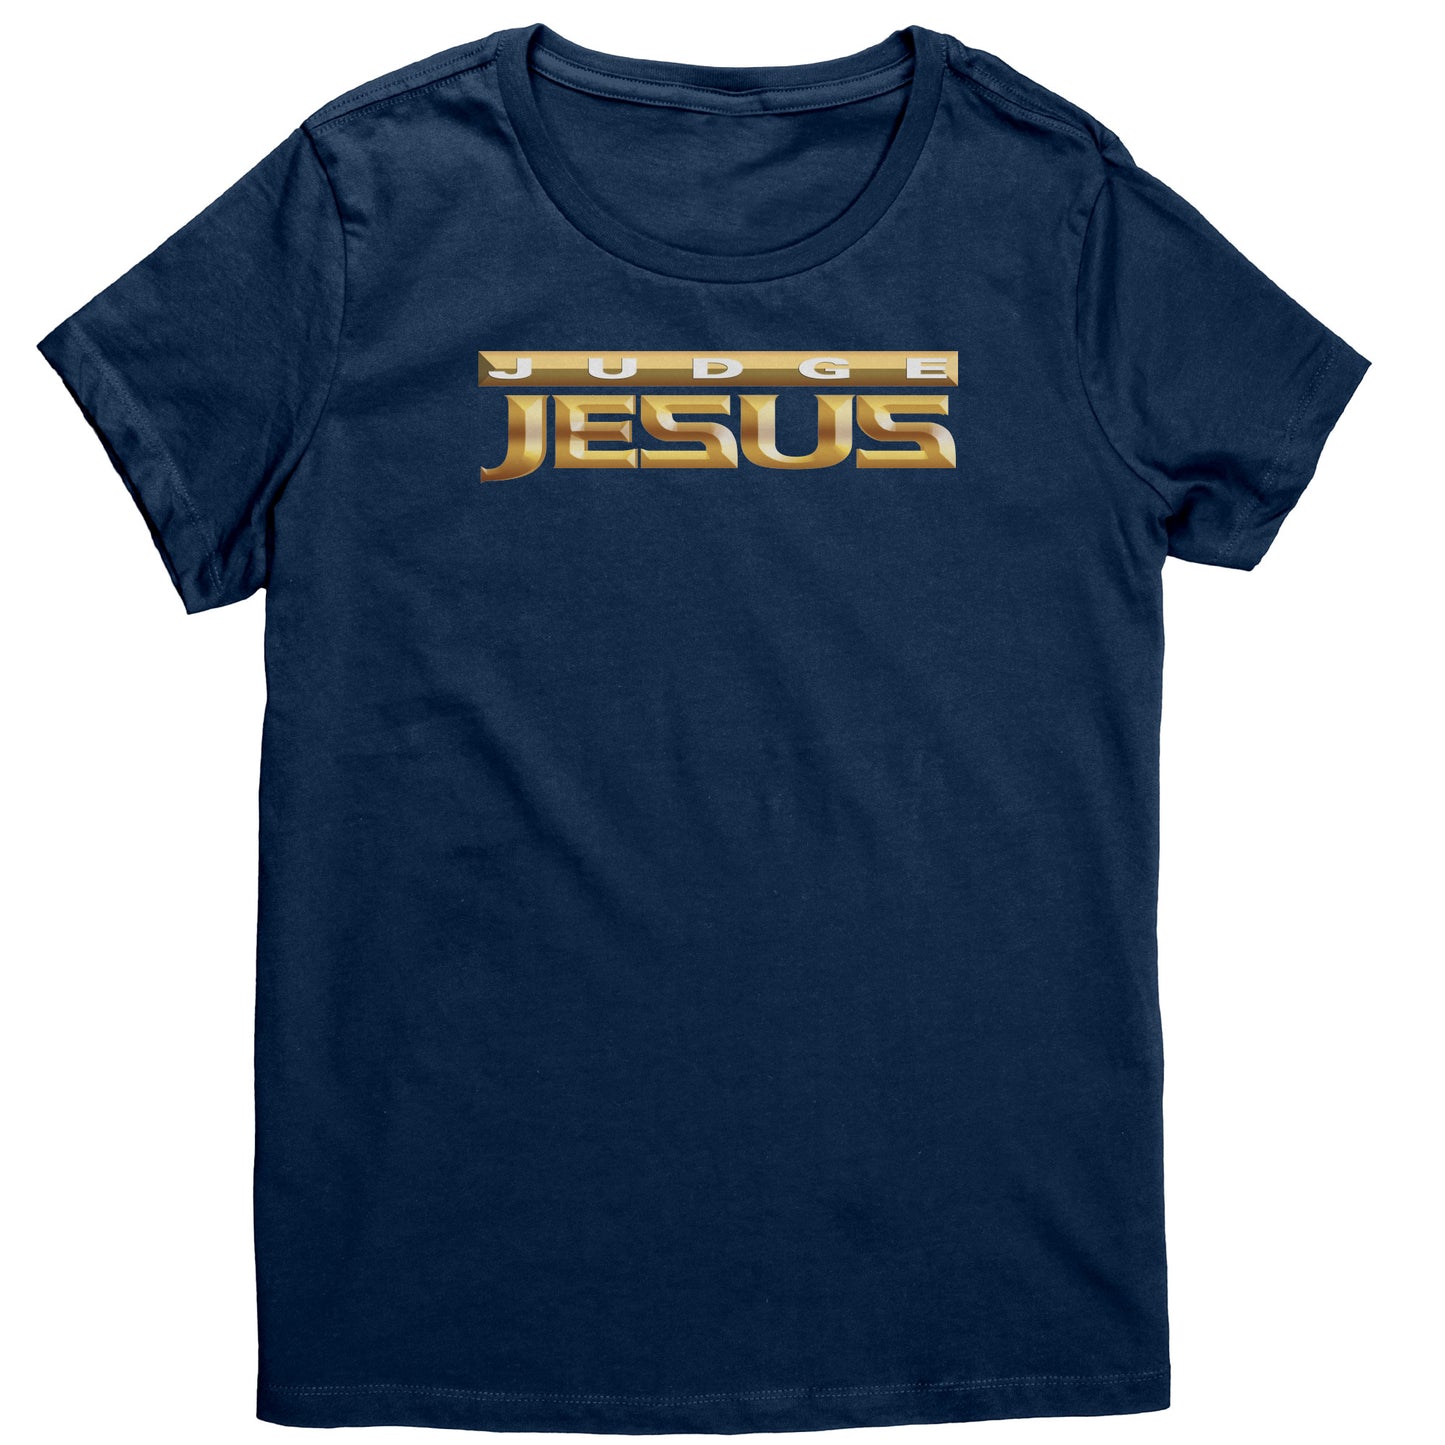 Judge Jesus Women's T-Shirt